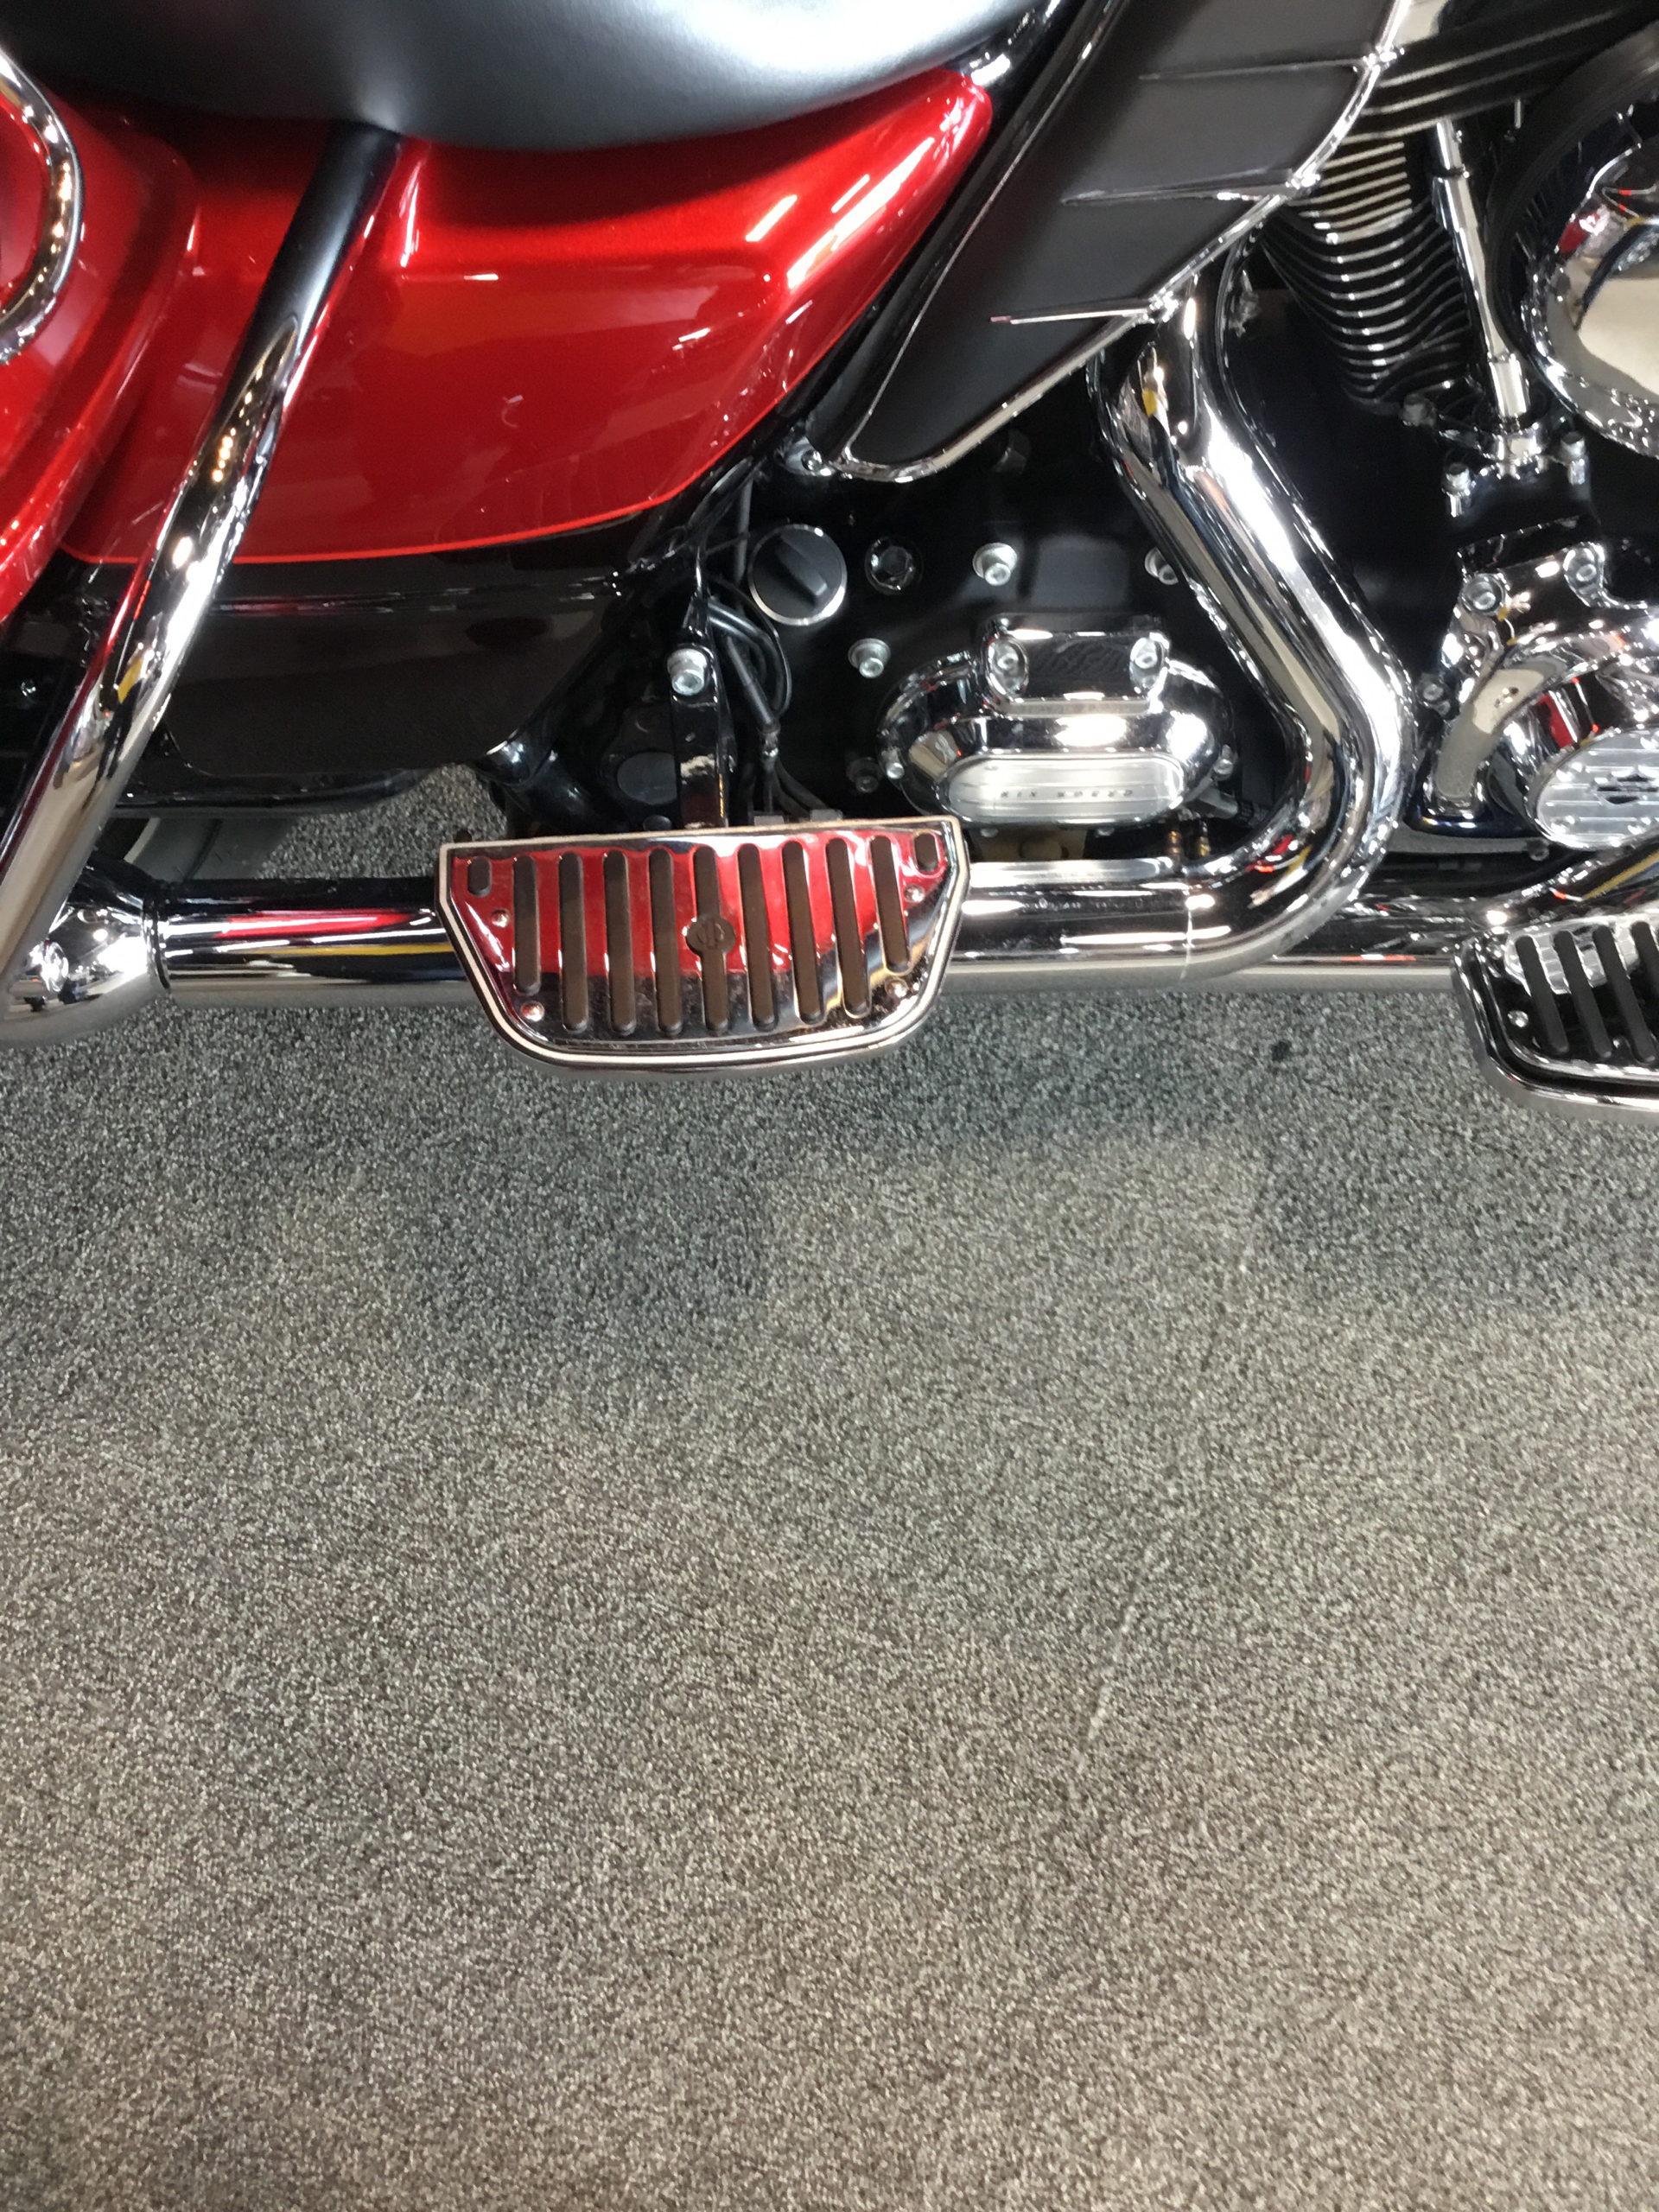 2013 Harley-Davidson Electra Glide® Ultra Limited in Sheboygan, Wisconsin - Photo 7